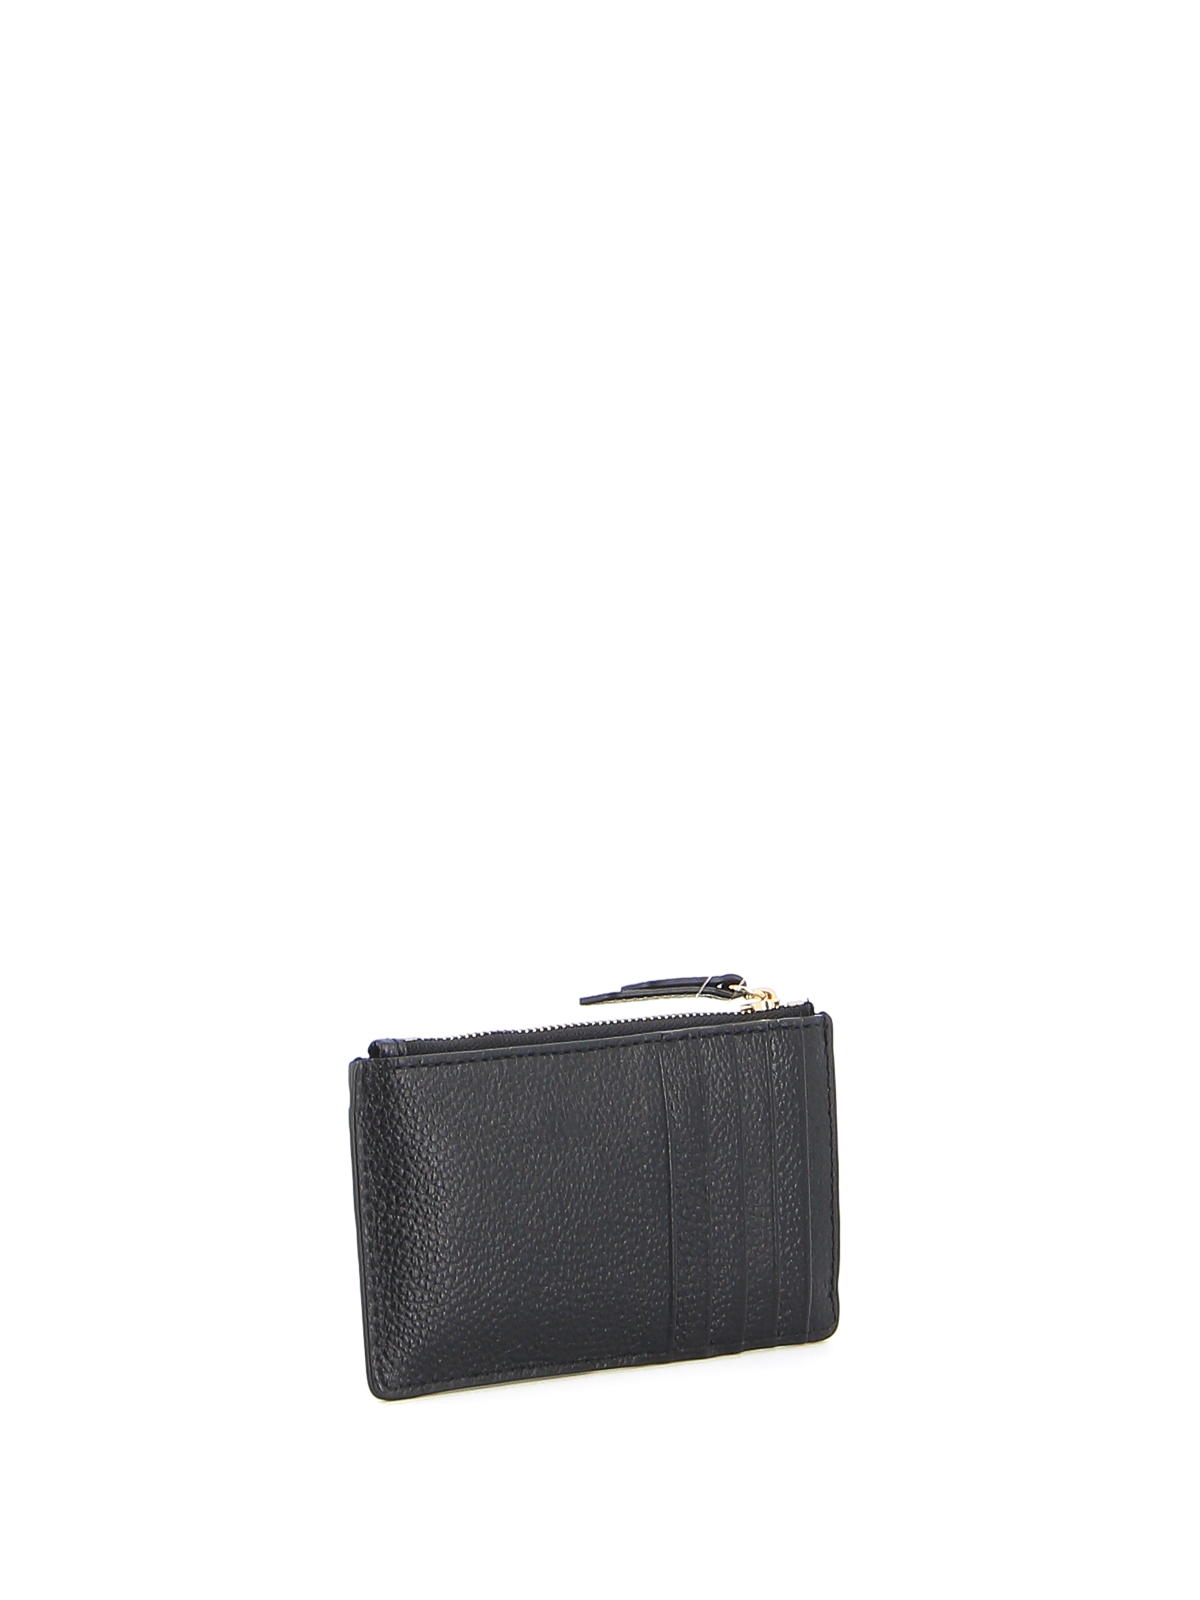 Wallets & purses Michael Kors - Jet Set card - 34H0GT9D6L001